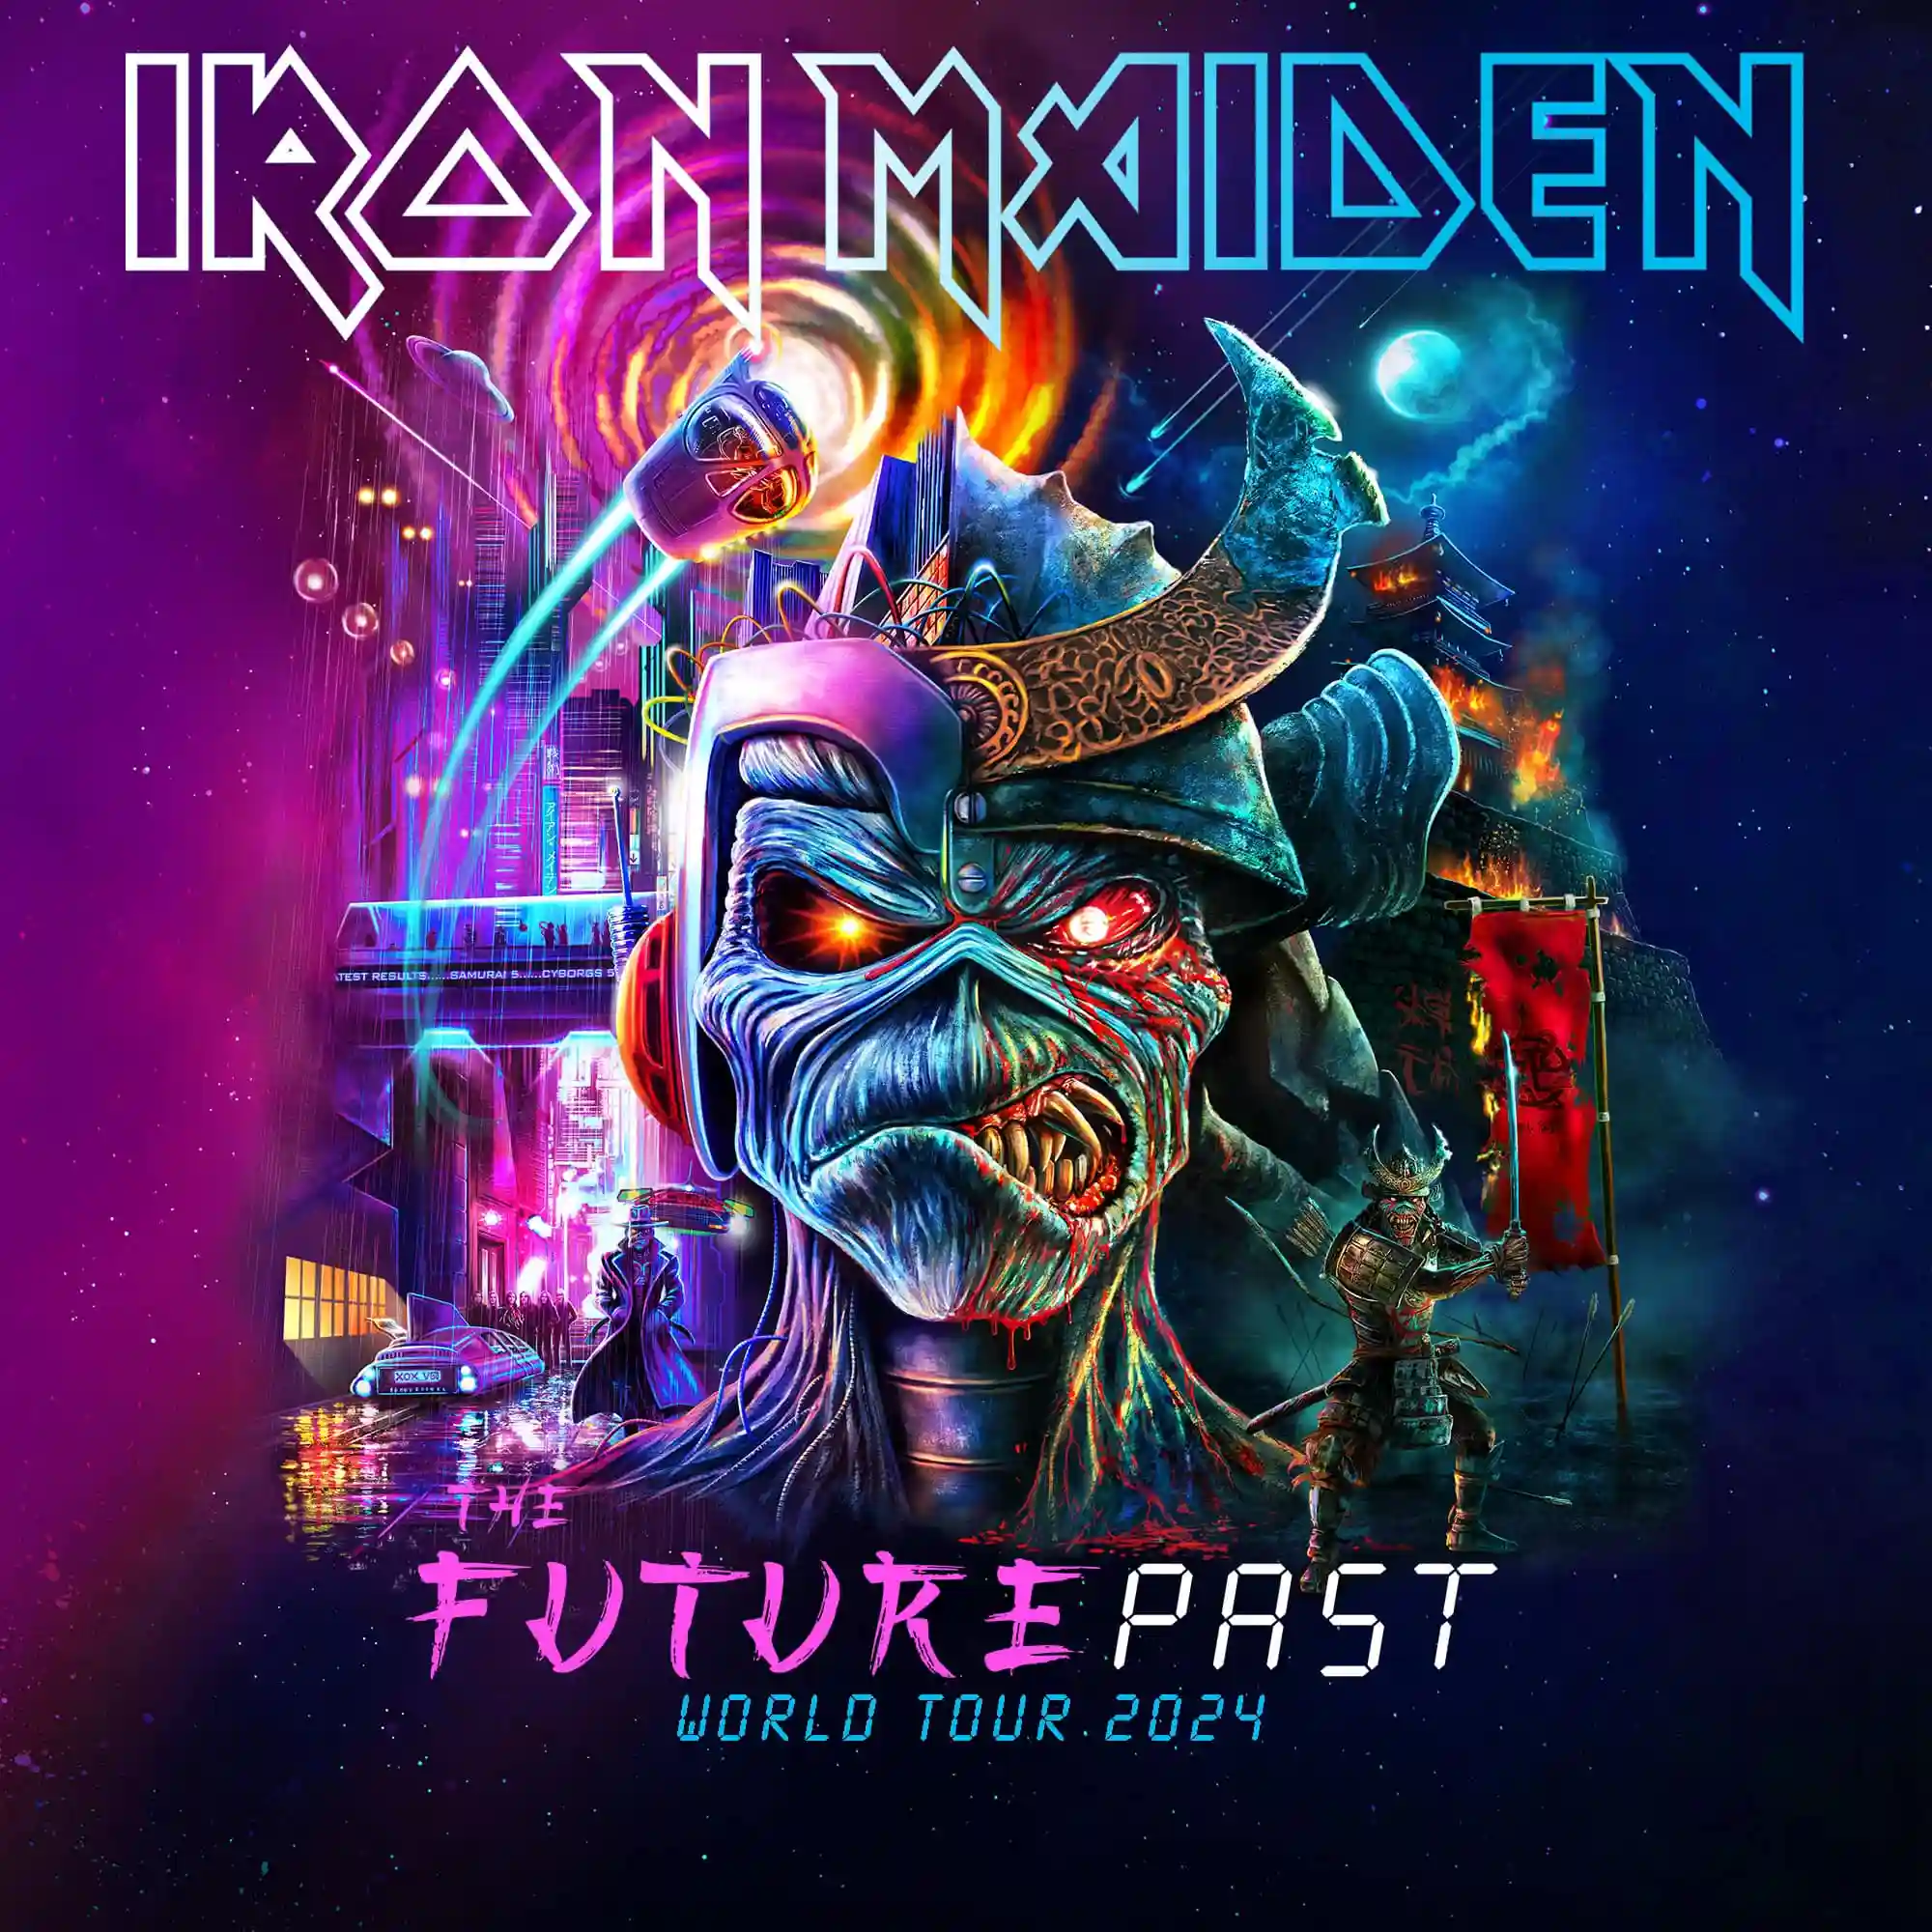 iron-maiden-the-future-past-world-tour-2024-dates-ticket-details-presale-code